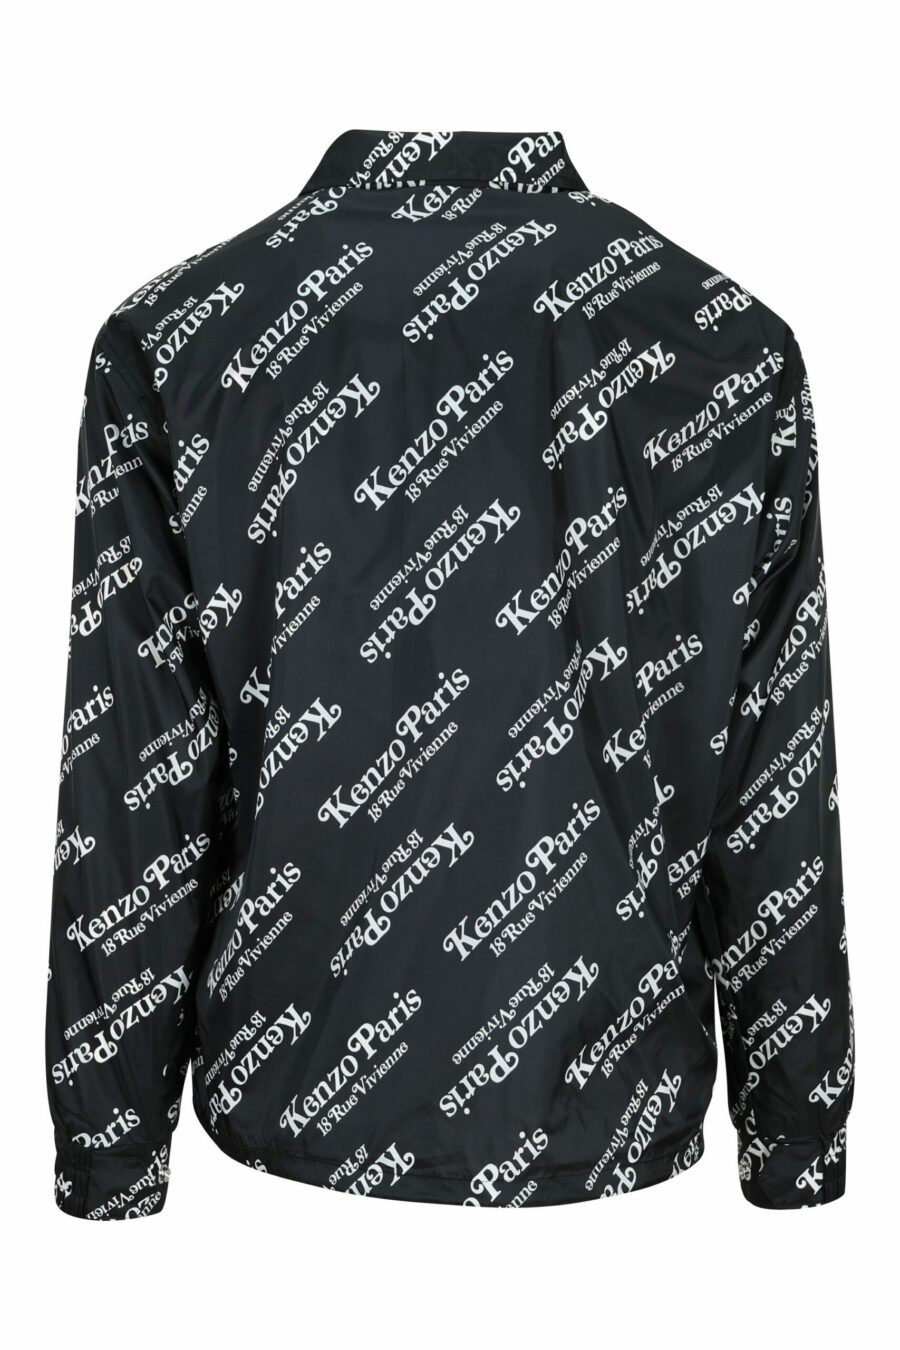 Black jacket logo "kenzo by verdy" - 3612230606845 1 scaled